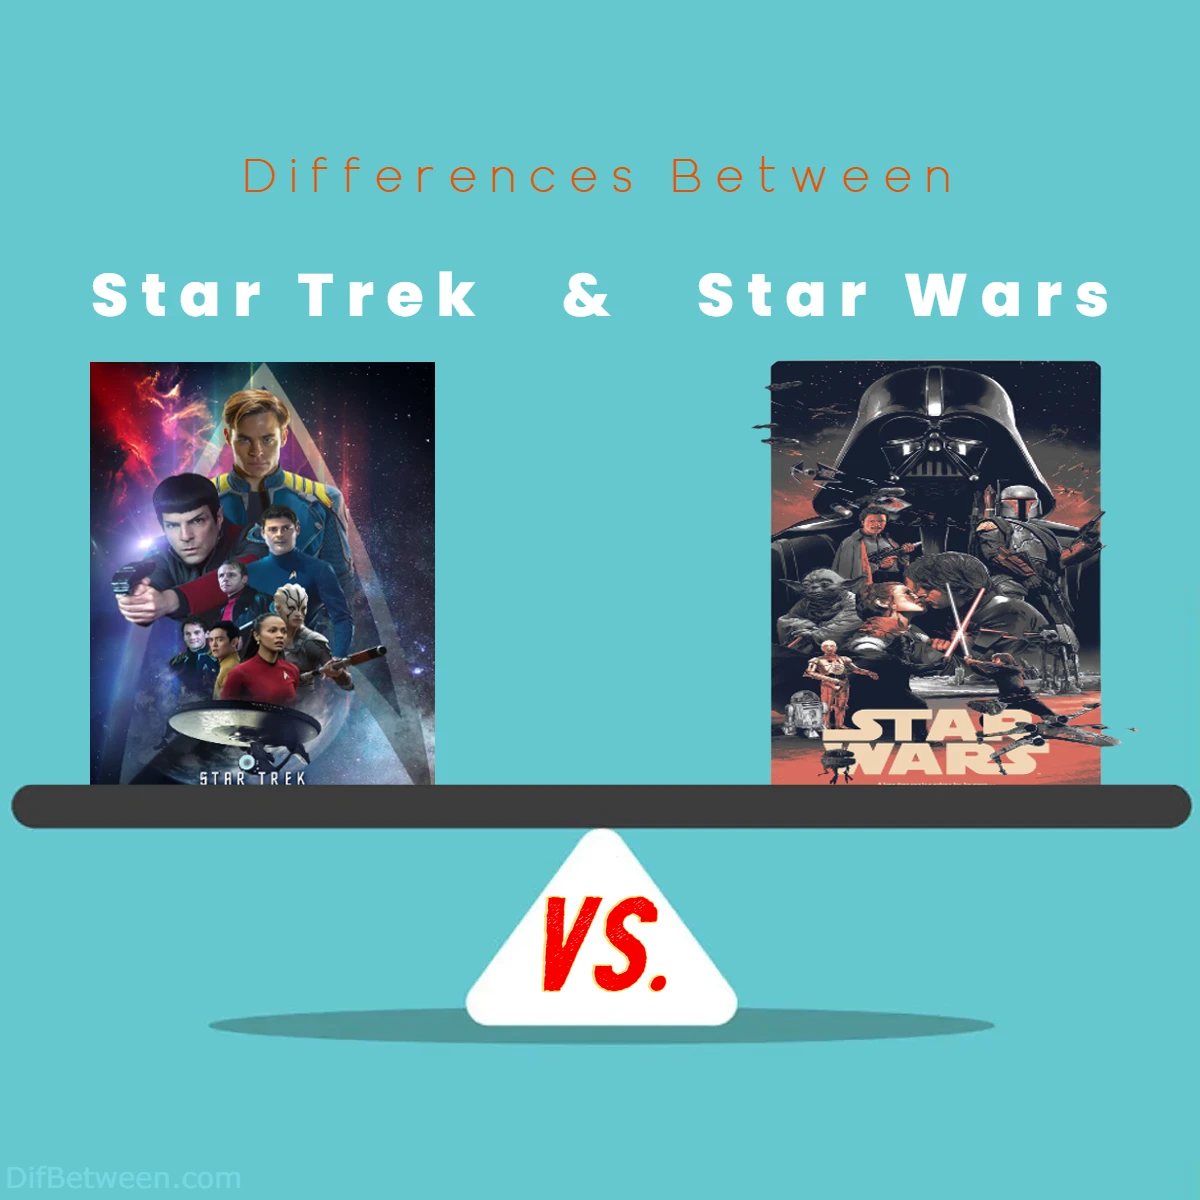 Differences Between Star Trek vs Star Wars